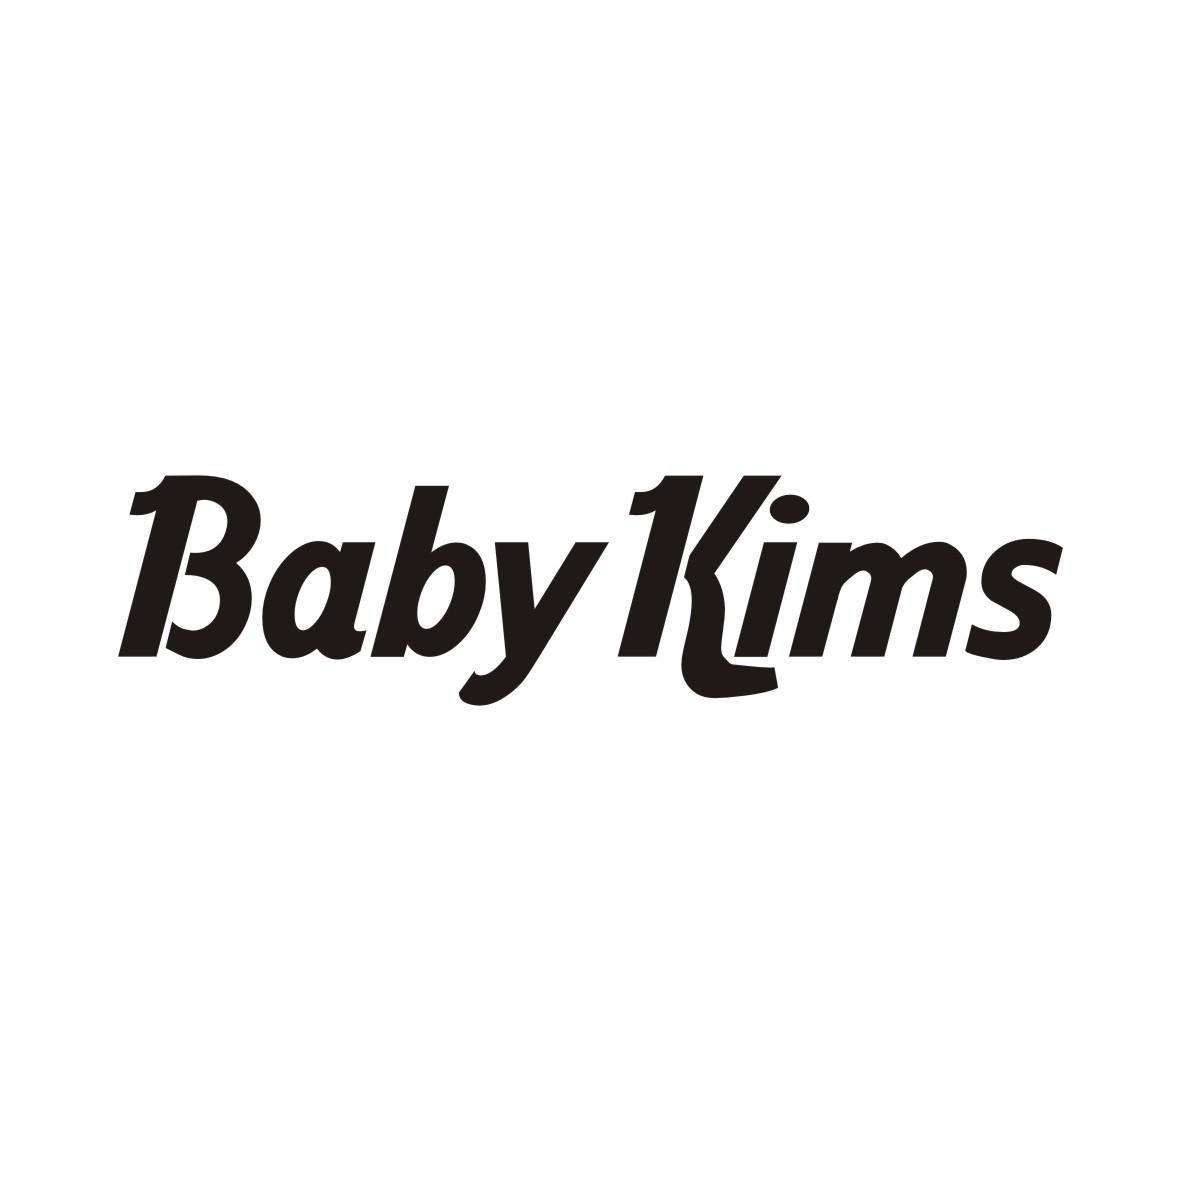 BABY KIMS商标转让